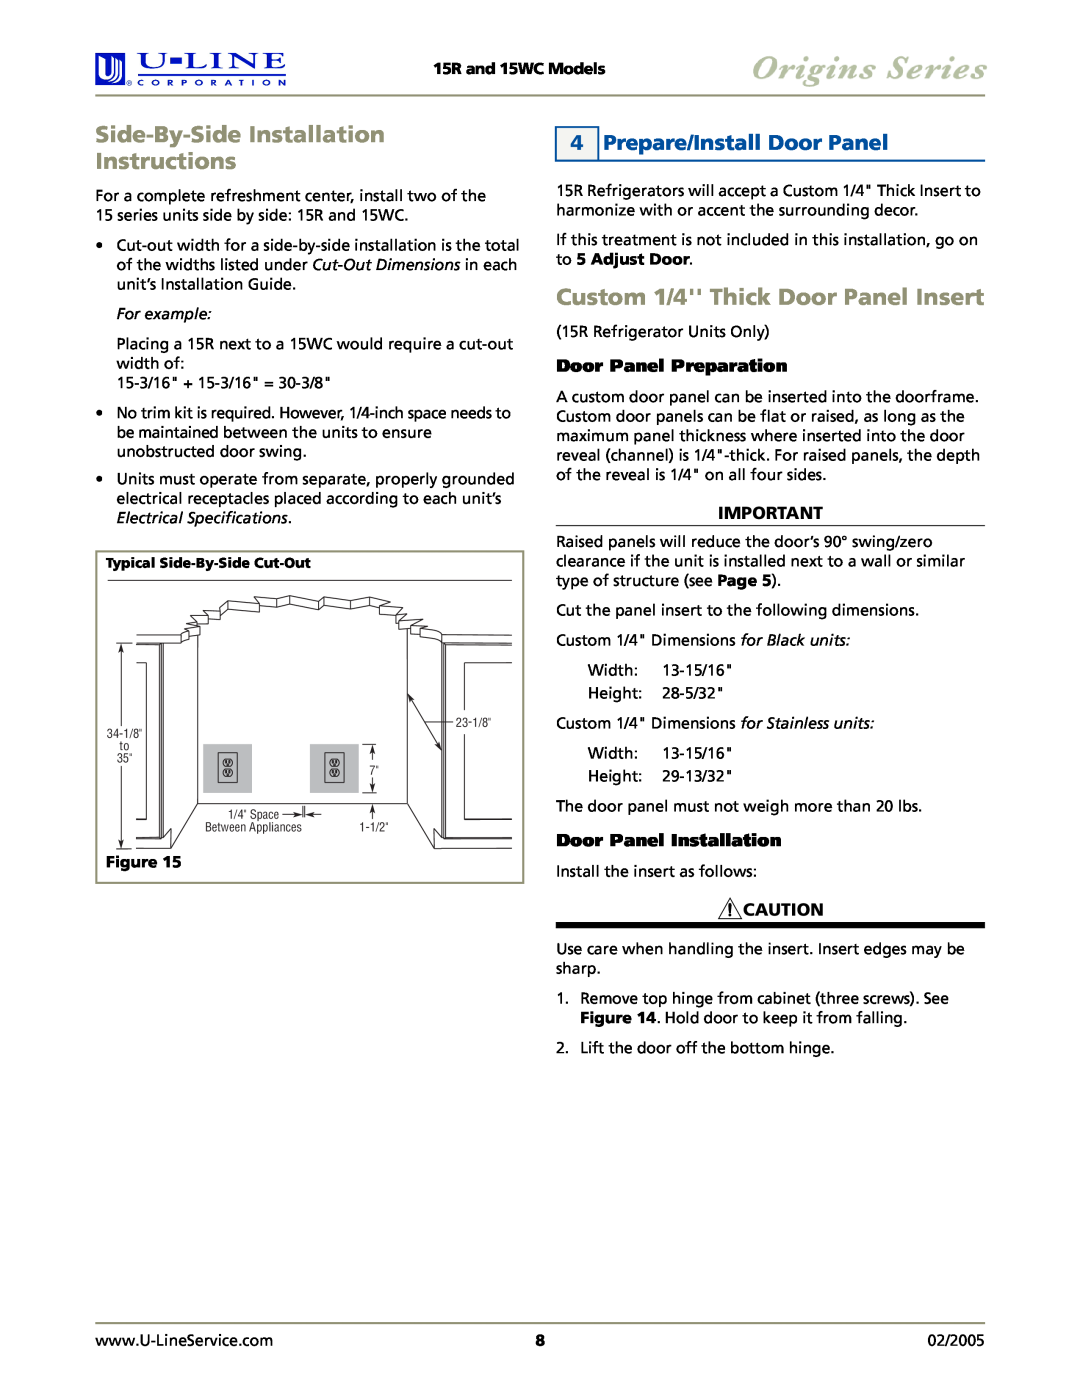 U-Line 15WC, 15R Side-By-Side Installation Instructions, Custom 1/4 Thick Door Panel Insert, Prepare/Install Door Panel 